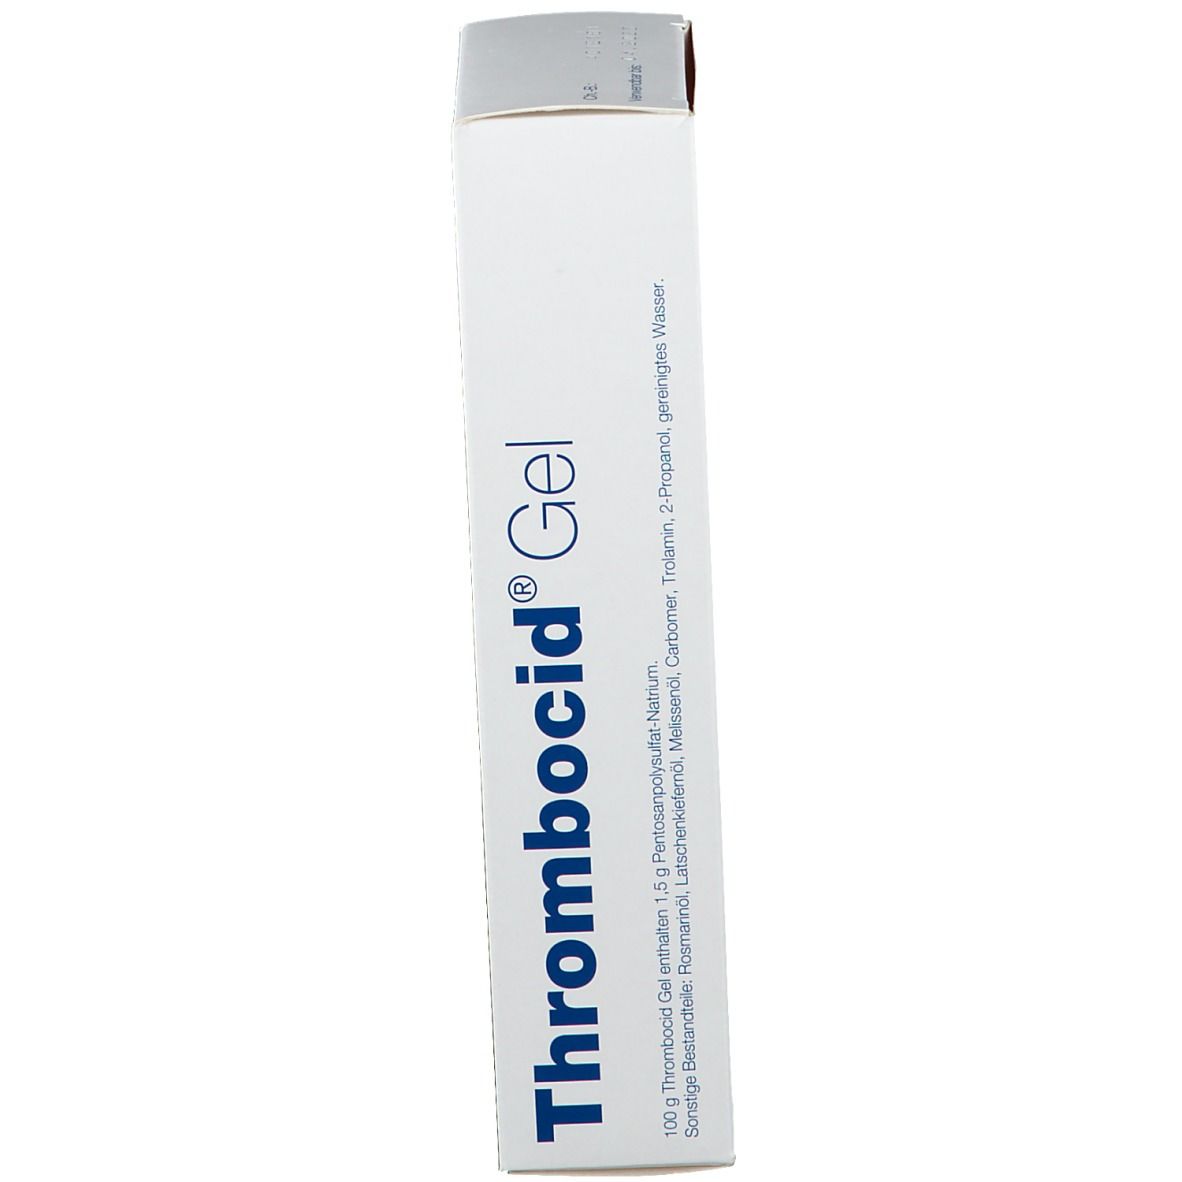 Thrombocid® Gel